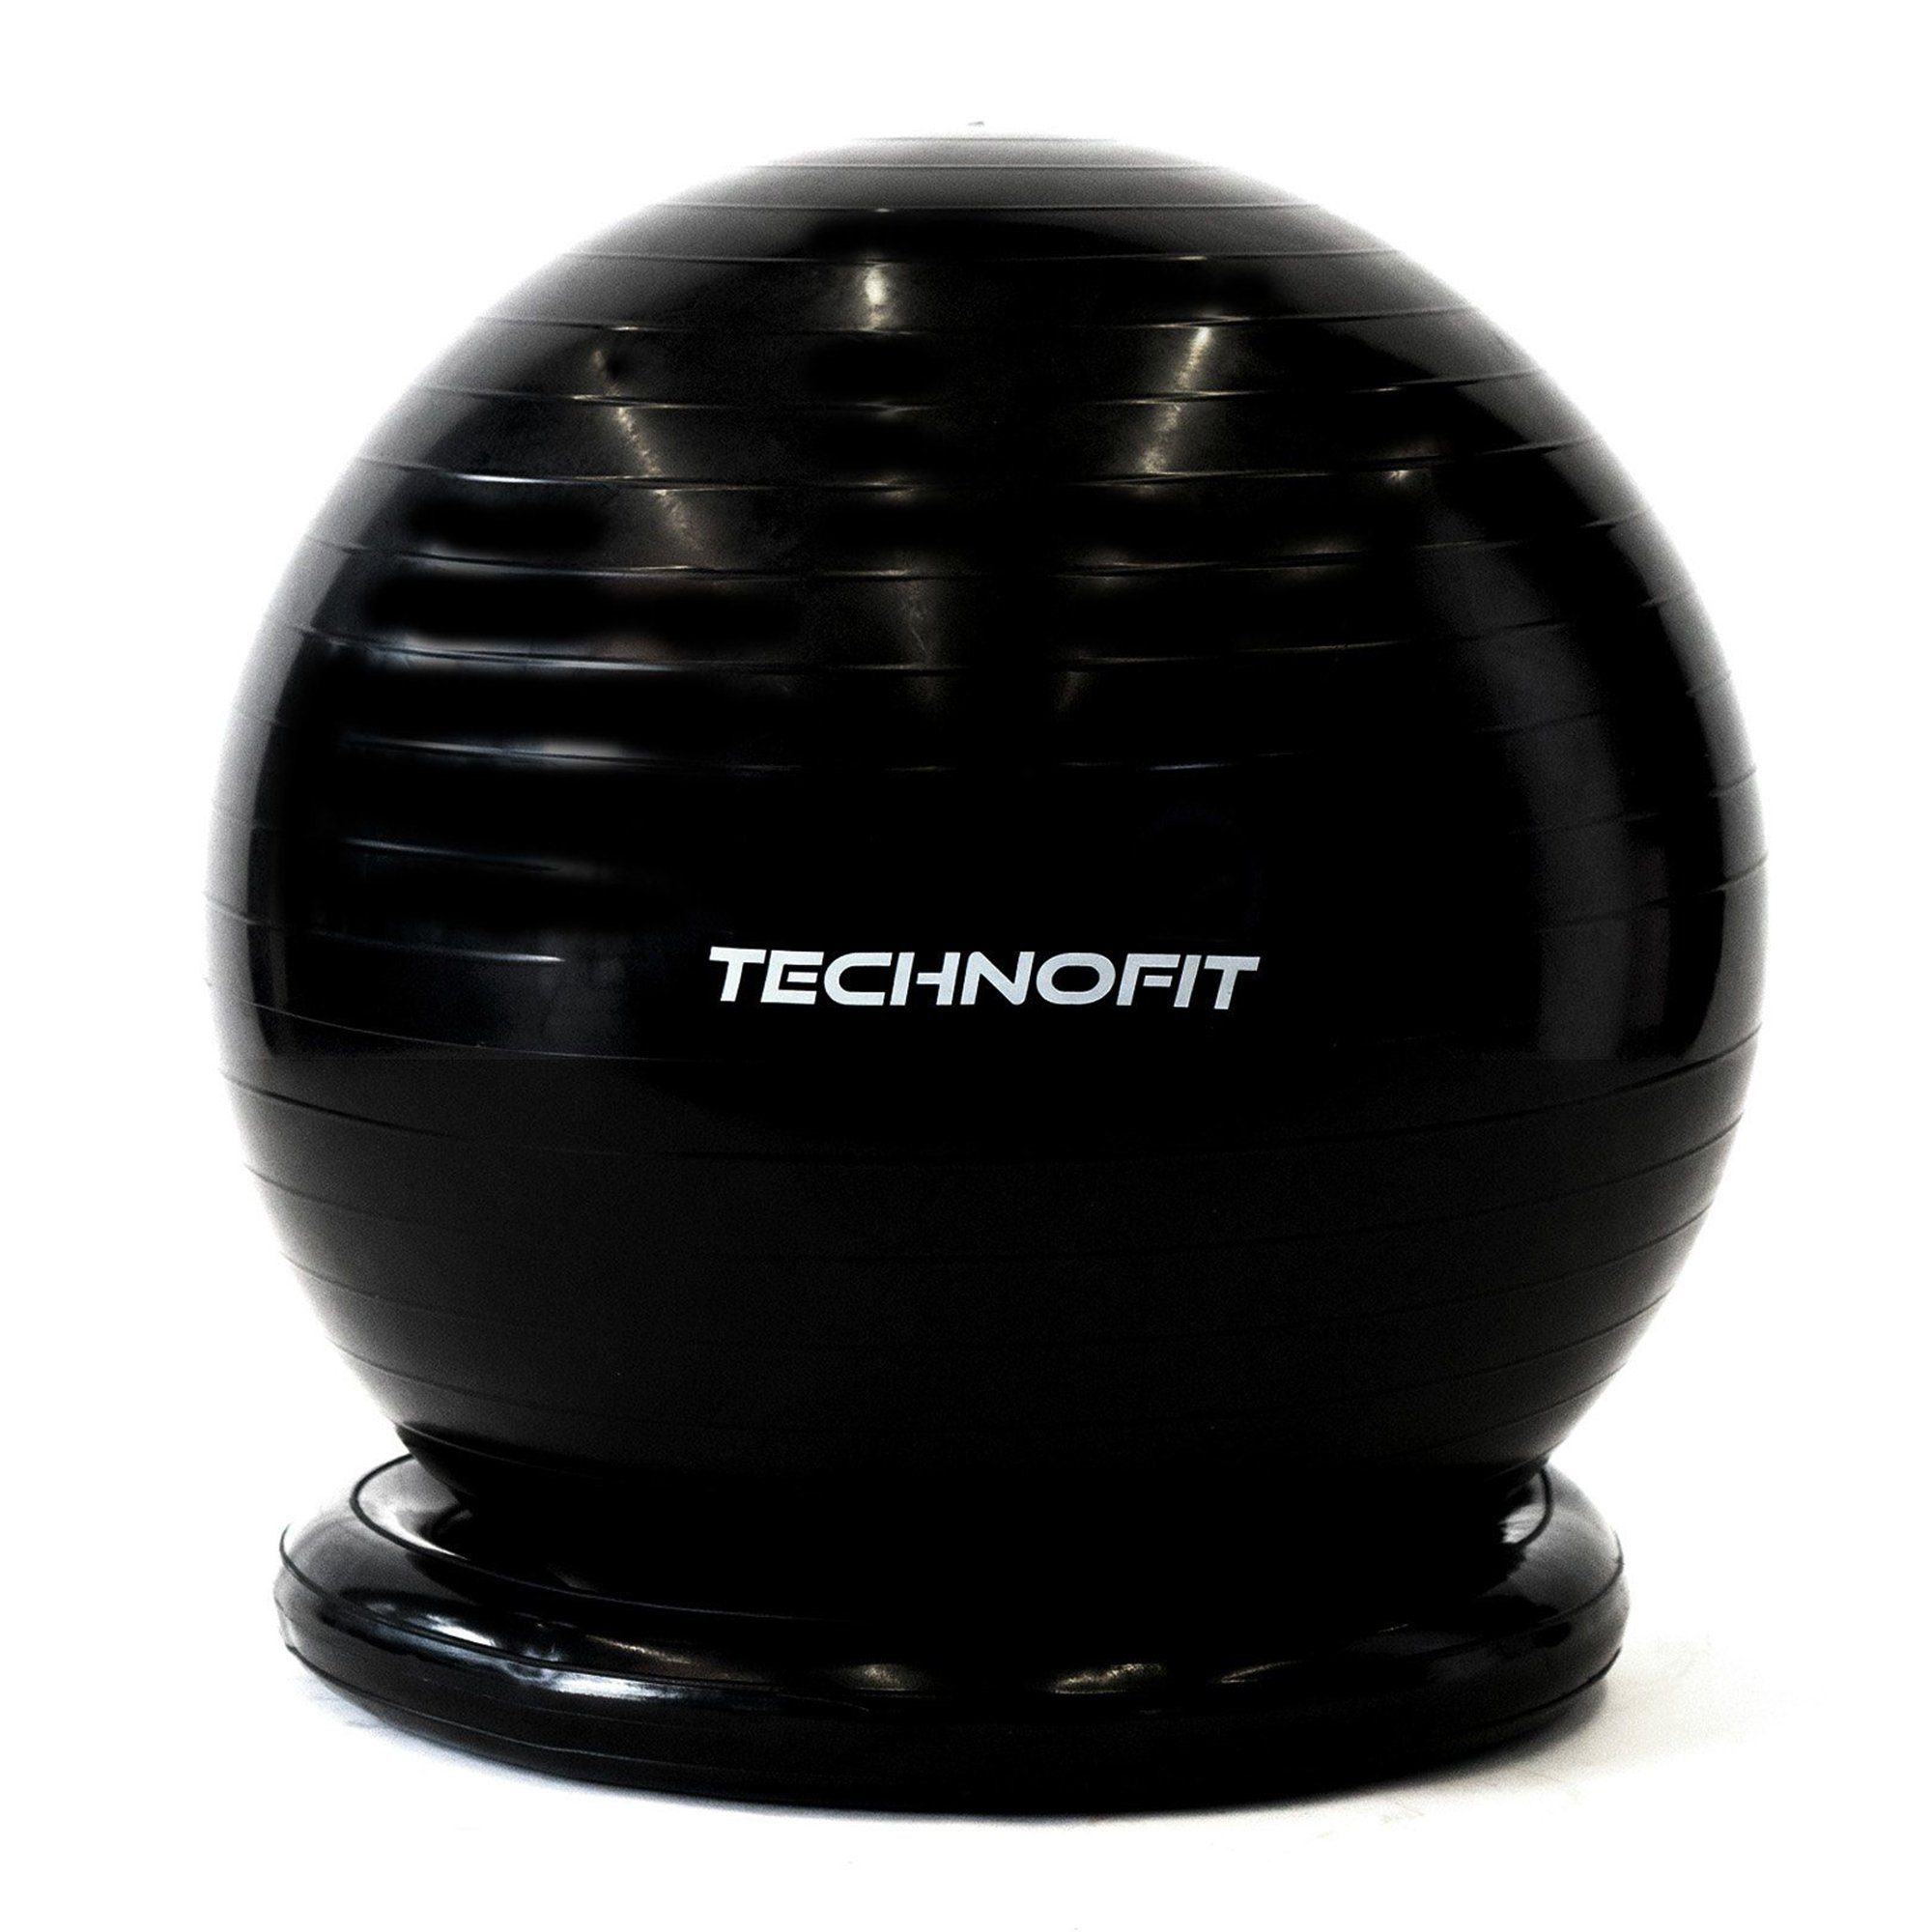 Technofit Gymnastikball Sitzball Yoga Ball, Fitnessball mit rutschfester Basis Ballschale, mit Anti-Rutsch Design